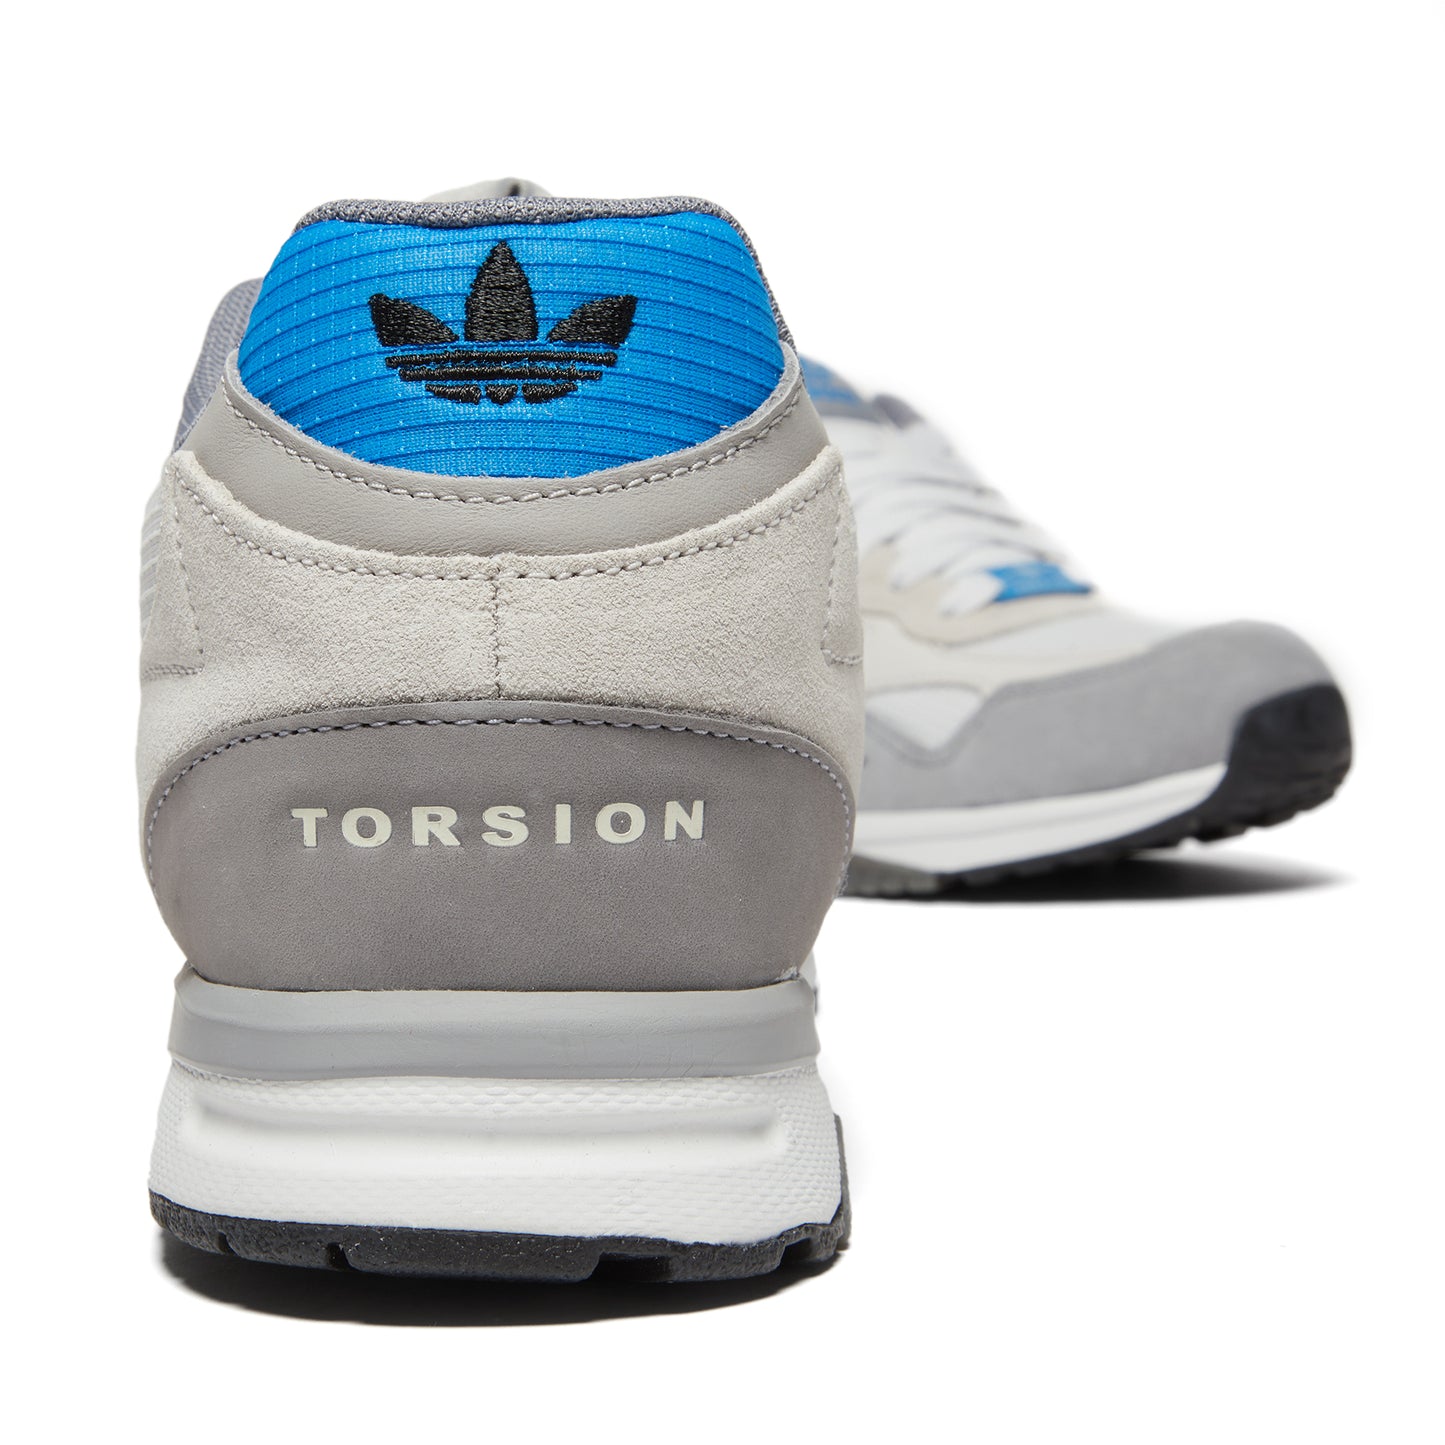 Adidas Torsion Super (White/Blue/Grey)